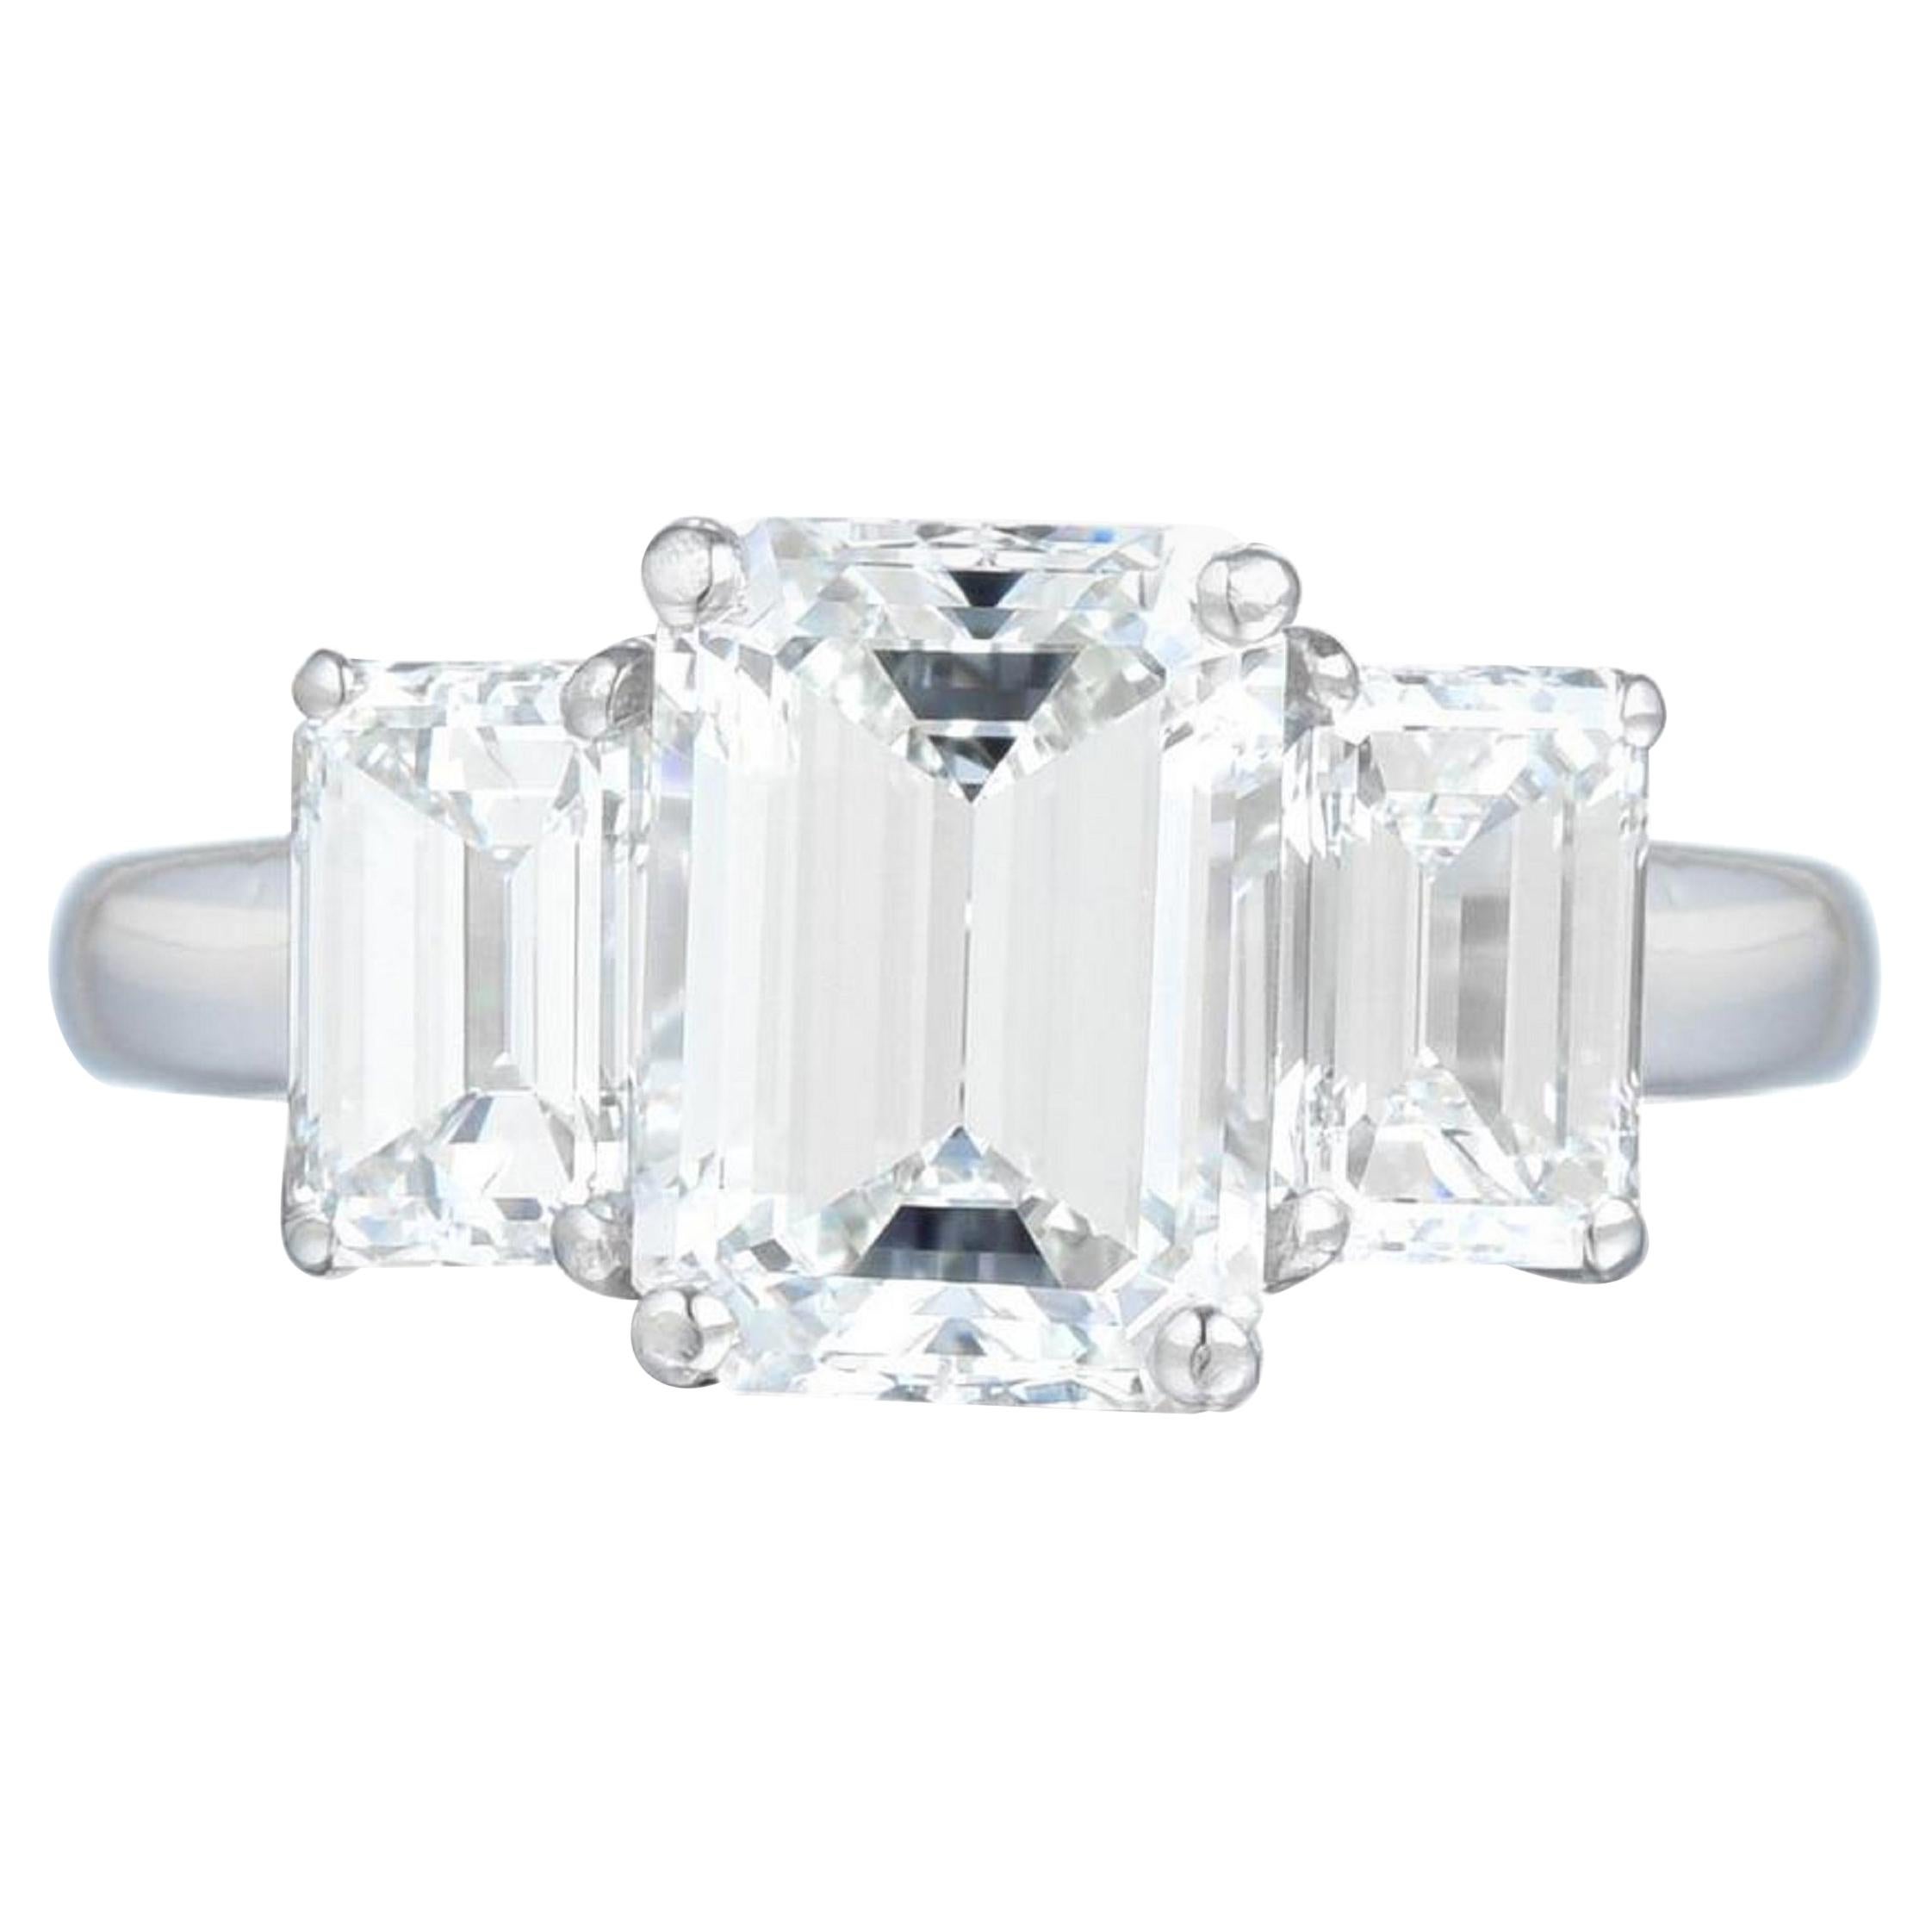 Flawless Color GIA Certified 4 Carat 'Main Stone' Emerald Cut Diamond Ring